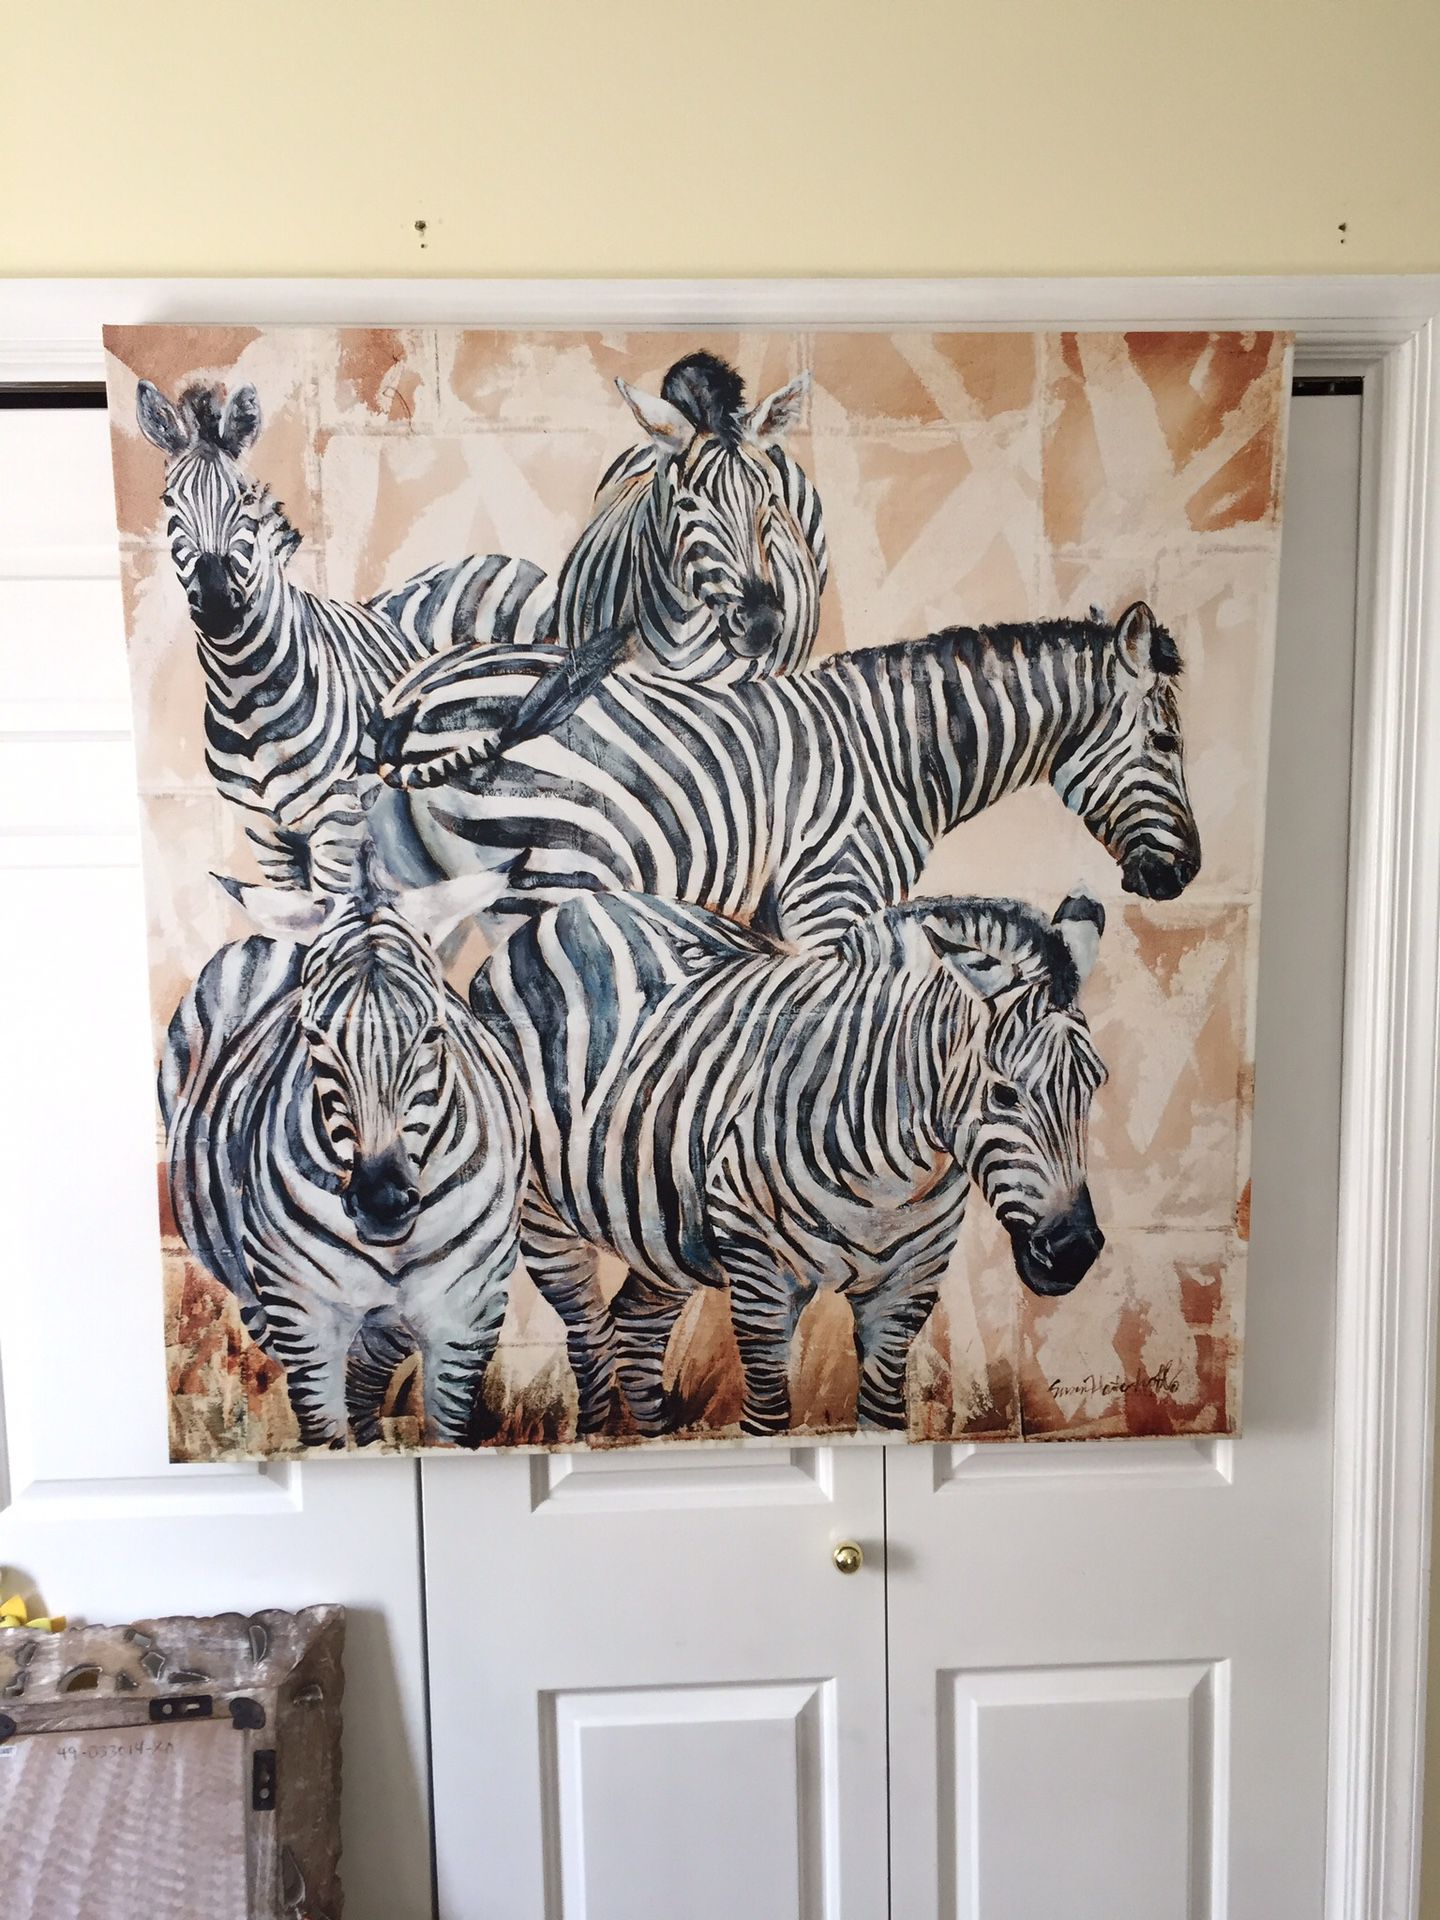 Beautiful Large Canvas Art of Zebras!